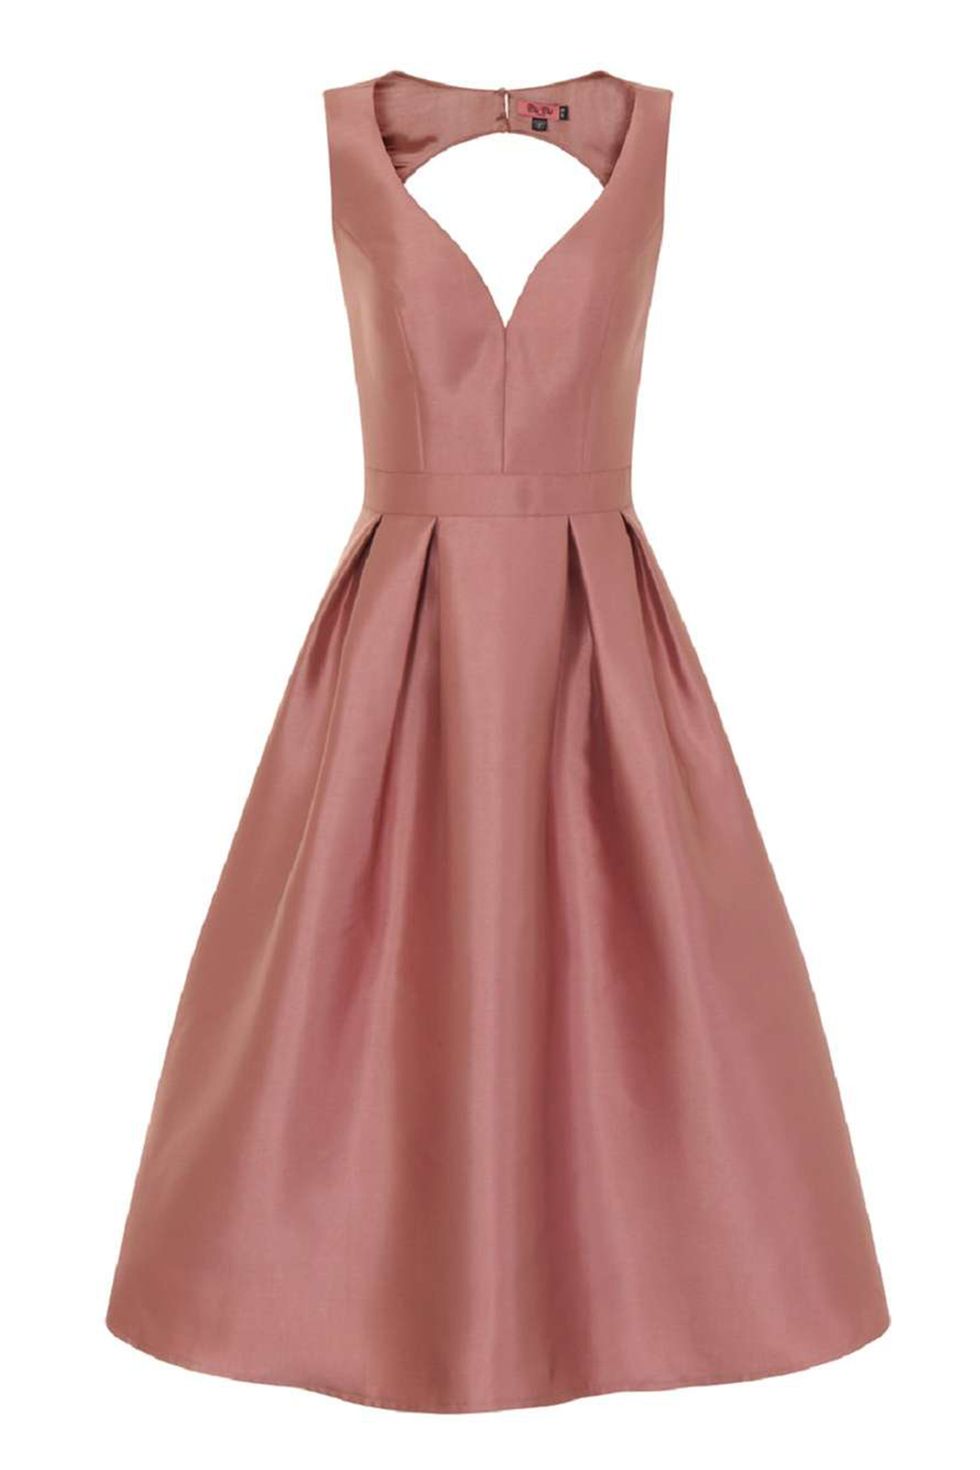 <p>Chi Chi London Pink Mesh Insert Midi Dress, $110; <a href="http://us.dorothyperkins.com/en/dpus/product/dresses-788629/view-all-dresses-2523266/chi-chi-london-pink-mesh-insert-midi-dress-6070950?bi=80&amp;ps=20" target="_blank">dorothyperkins.com</a></p>